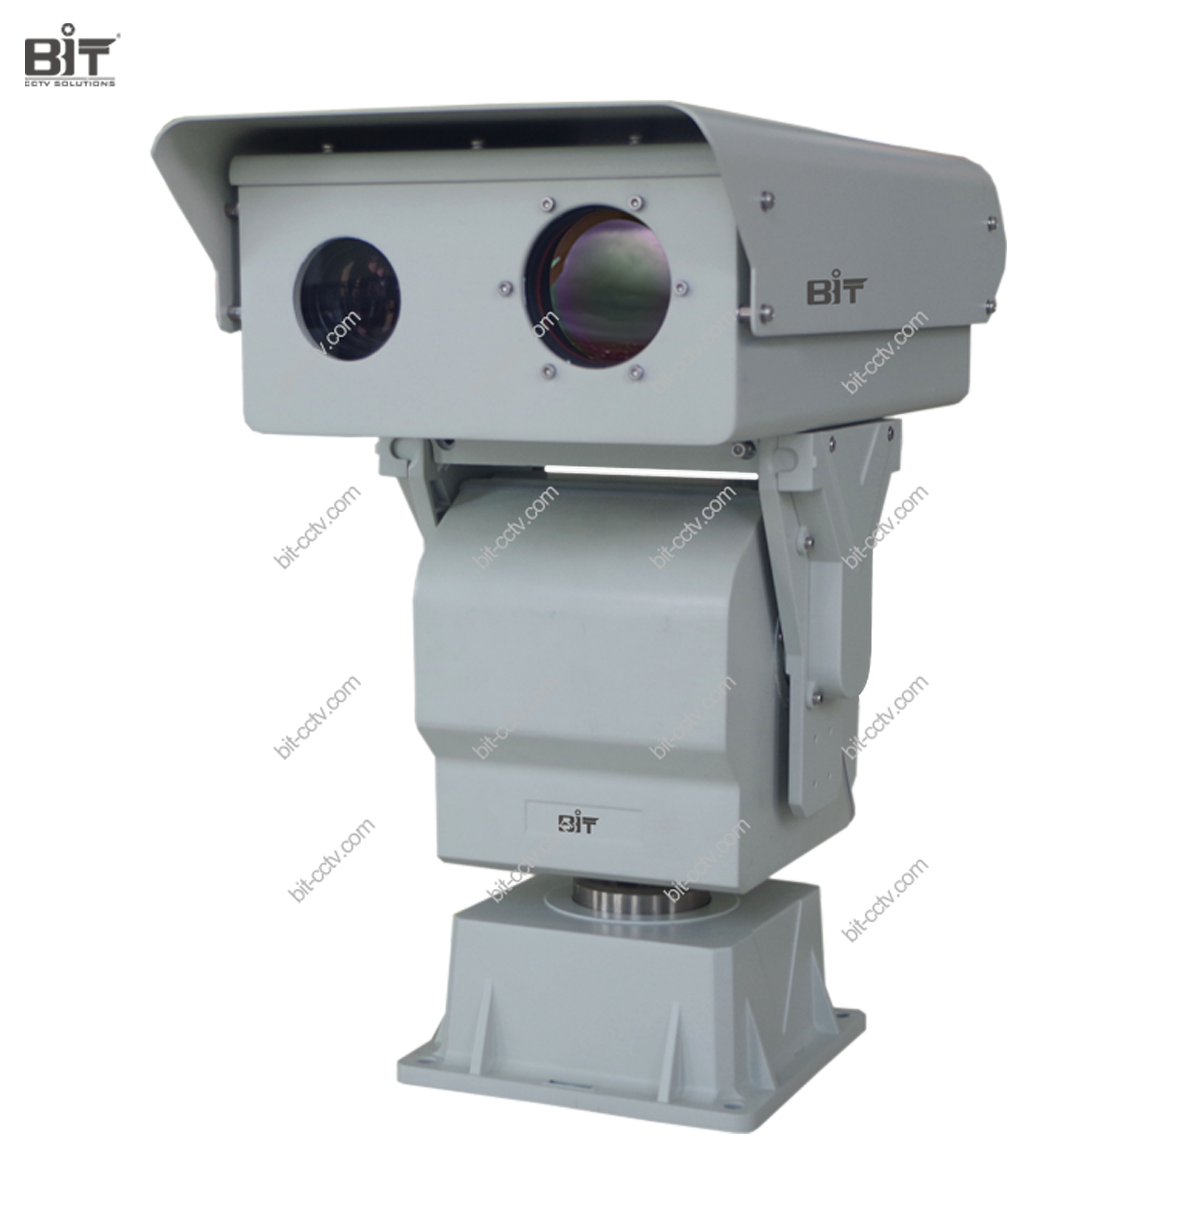 BIT-TVC4307W-2132-IP HD Visible and Thermal Imaging Dual Vision PTZ Camera